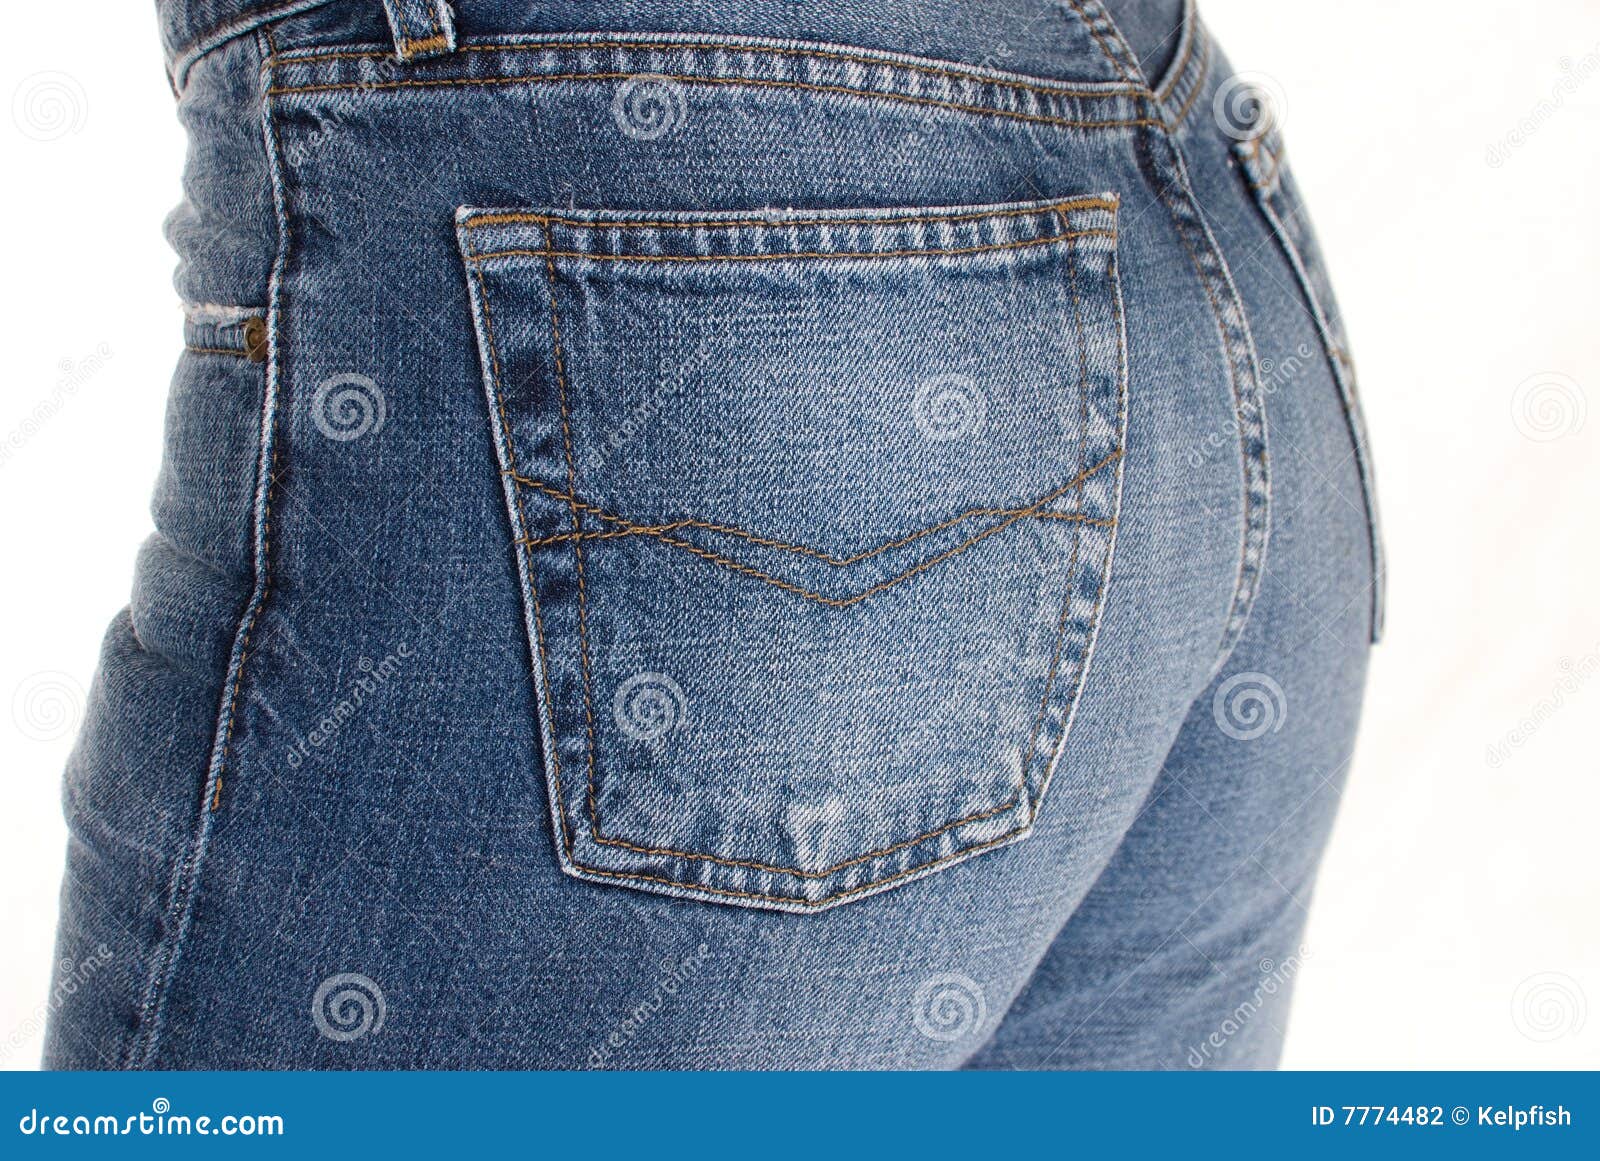 Tight fitting jeans stock photo. Image of white, horizontal - 7774482